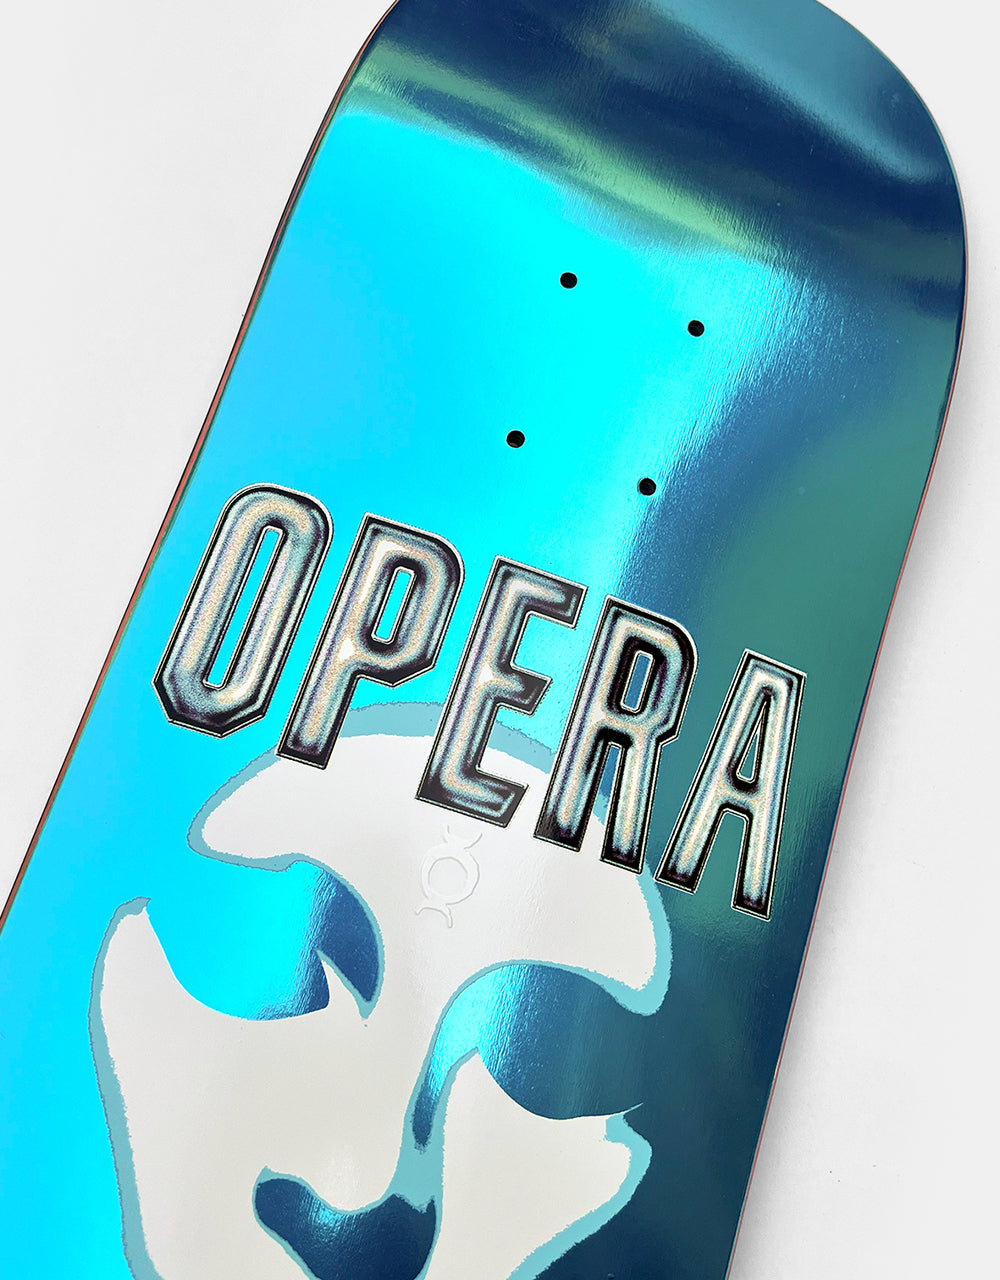 Opera Mask Logo EX7 Skateboard Deck - 8.25"